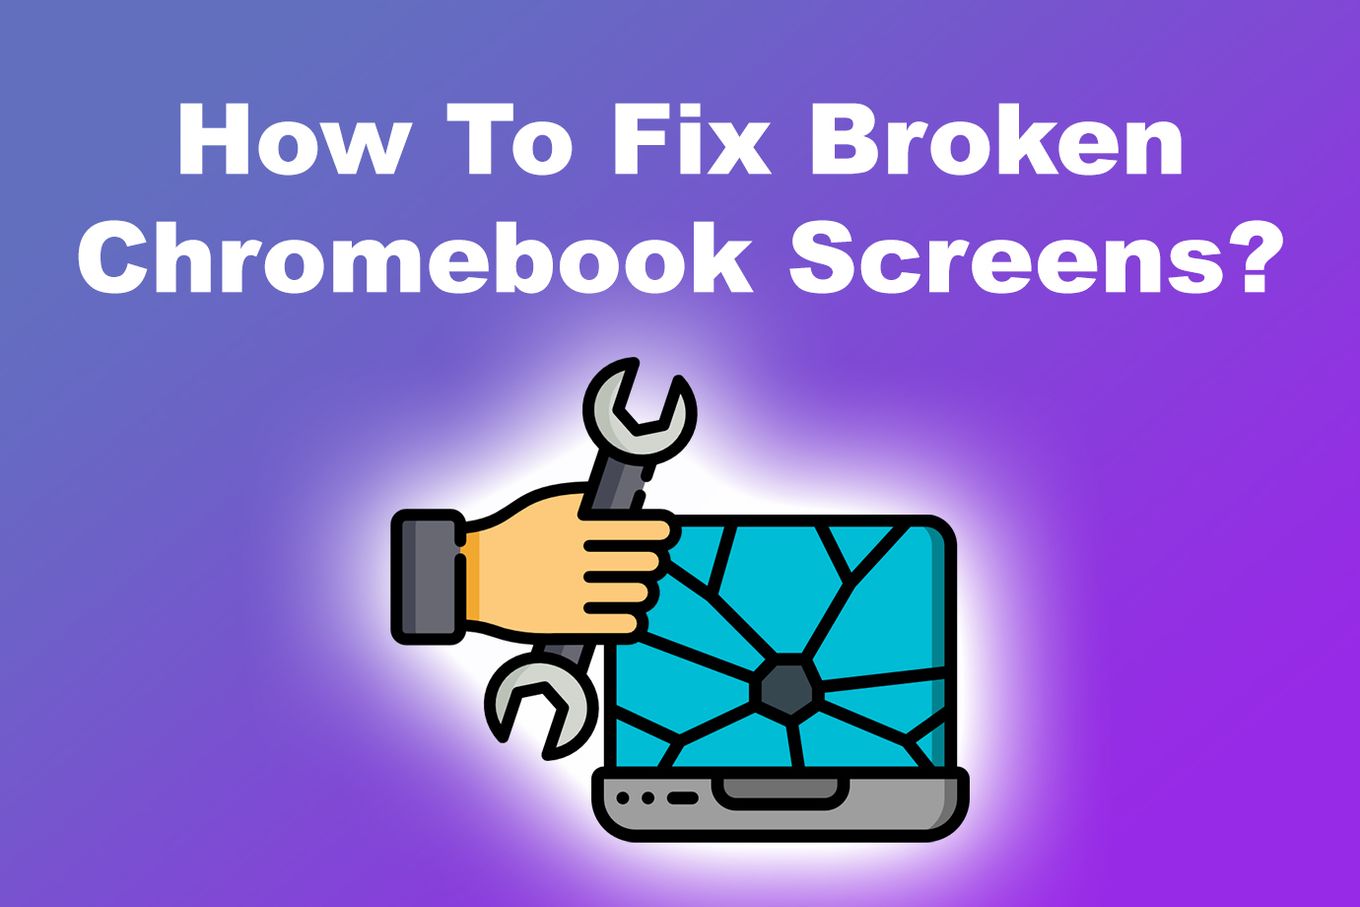 How To Fix Broken Chromebook Screens